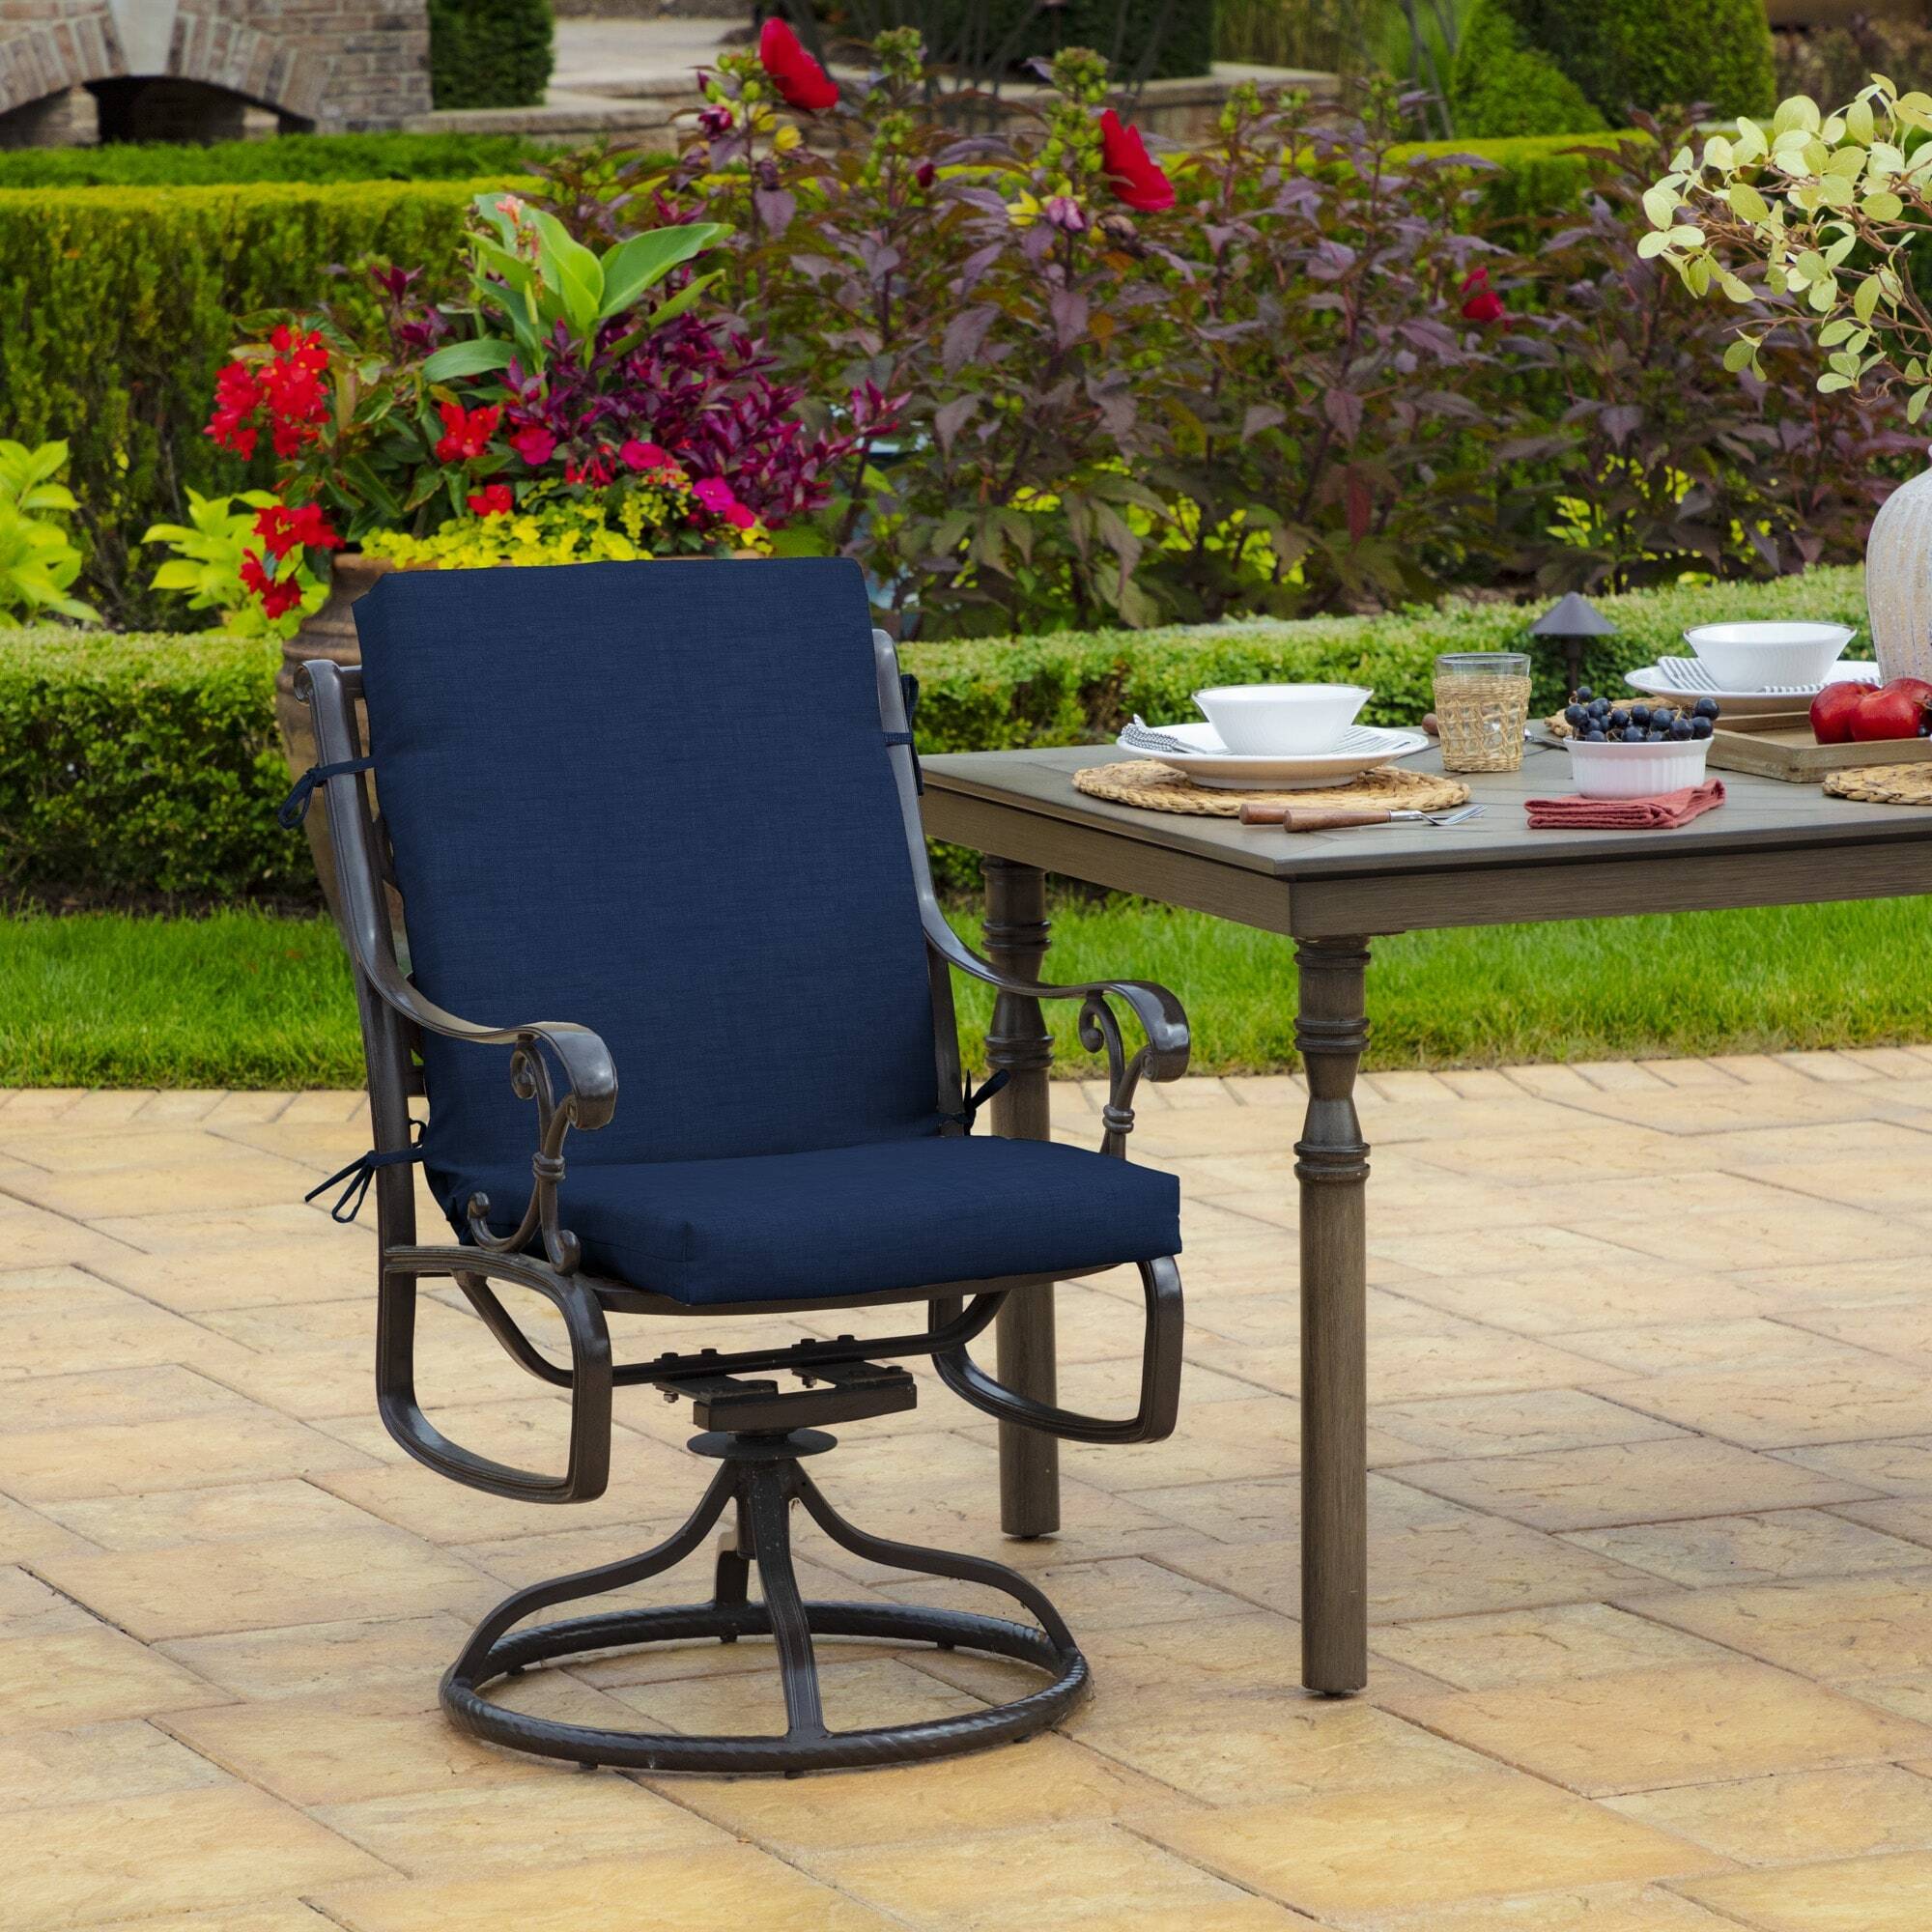 Garden Rocking Deck Chair High Back Chair Outdoor Thick Sun Seat Pad Cushion US 